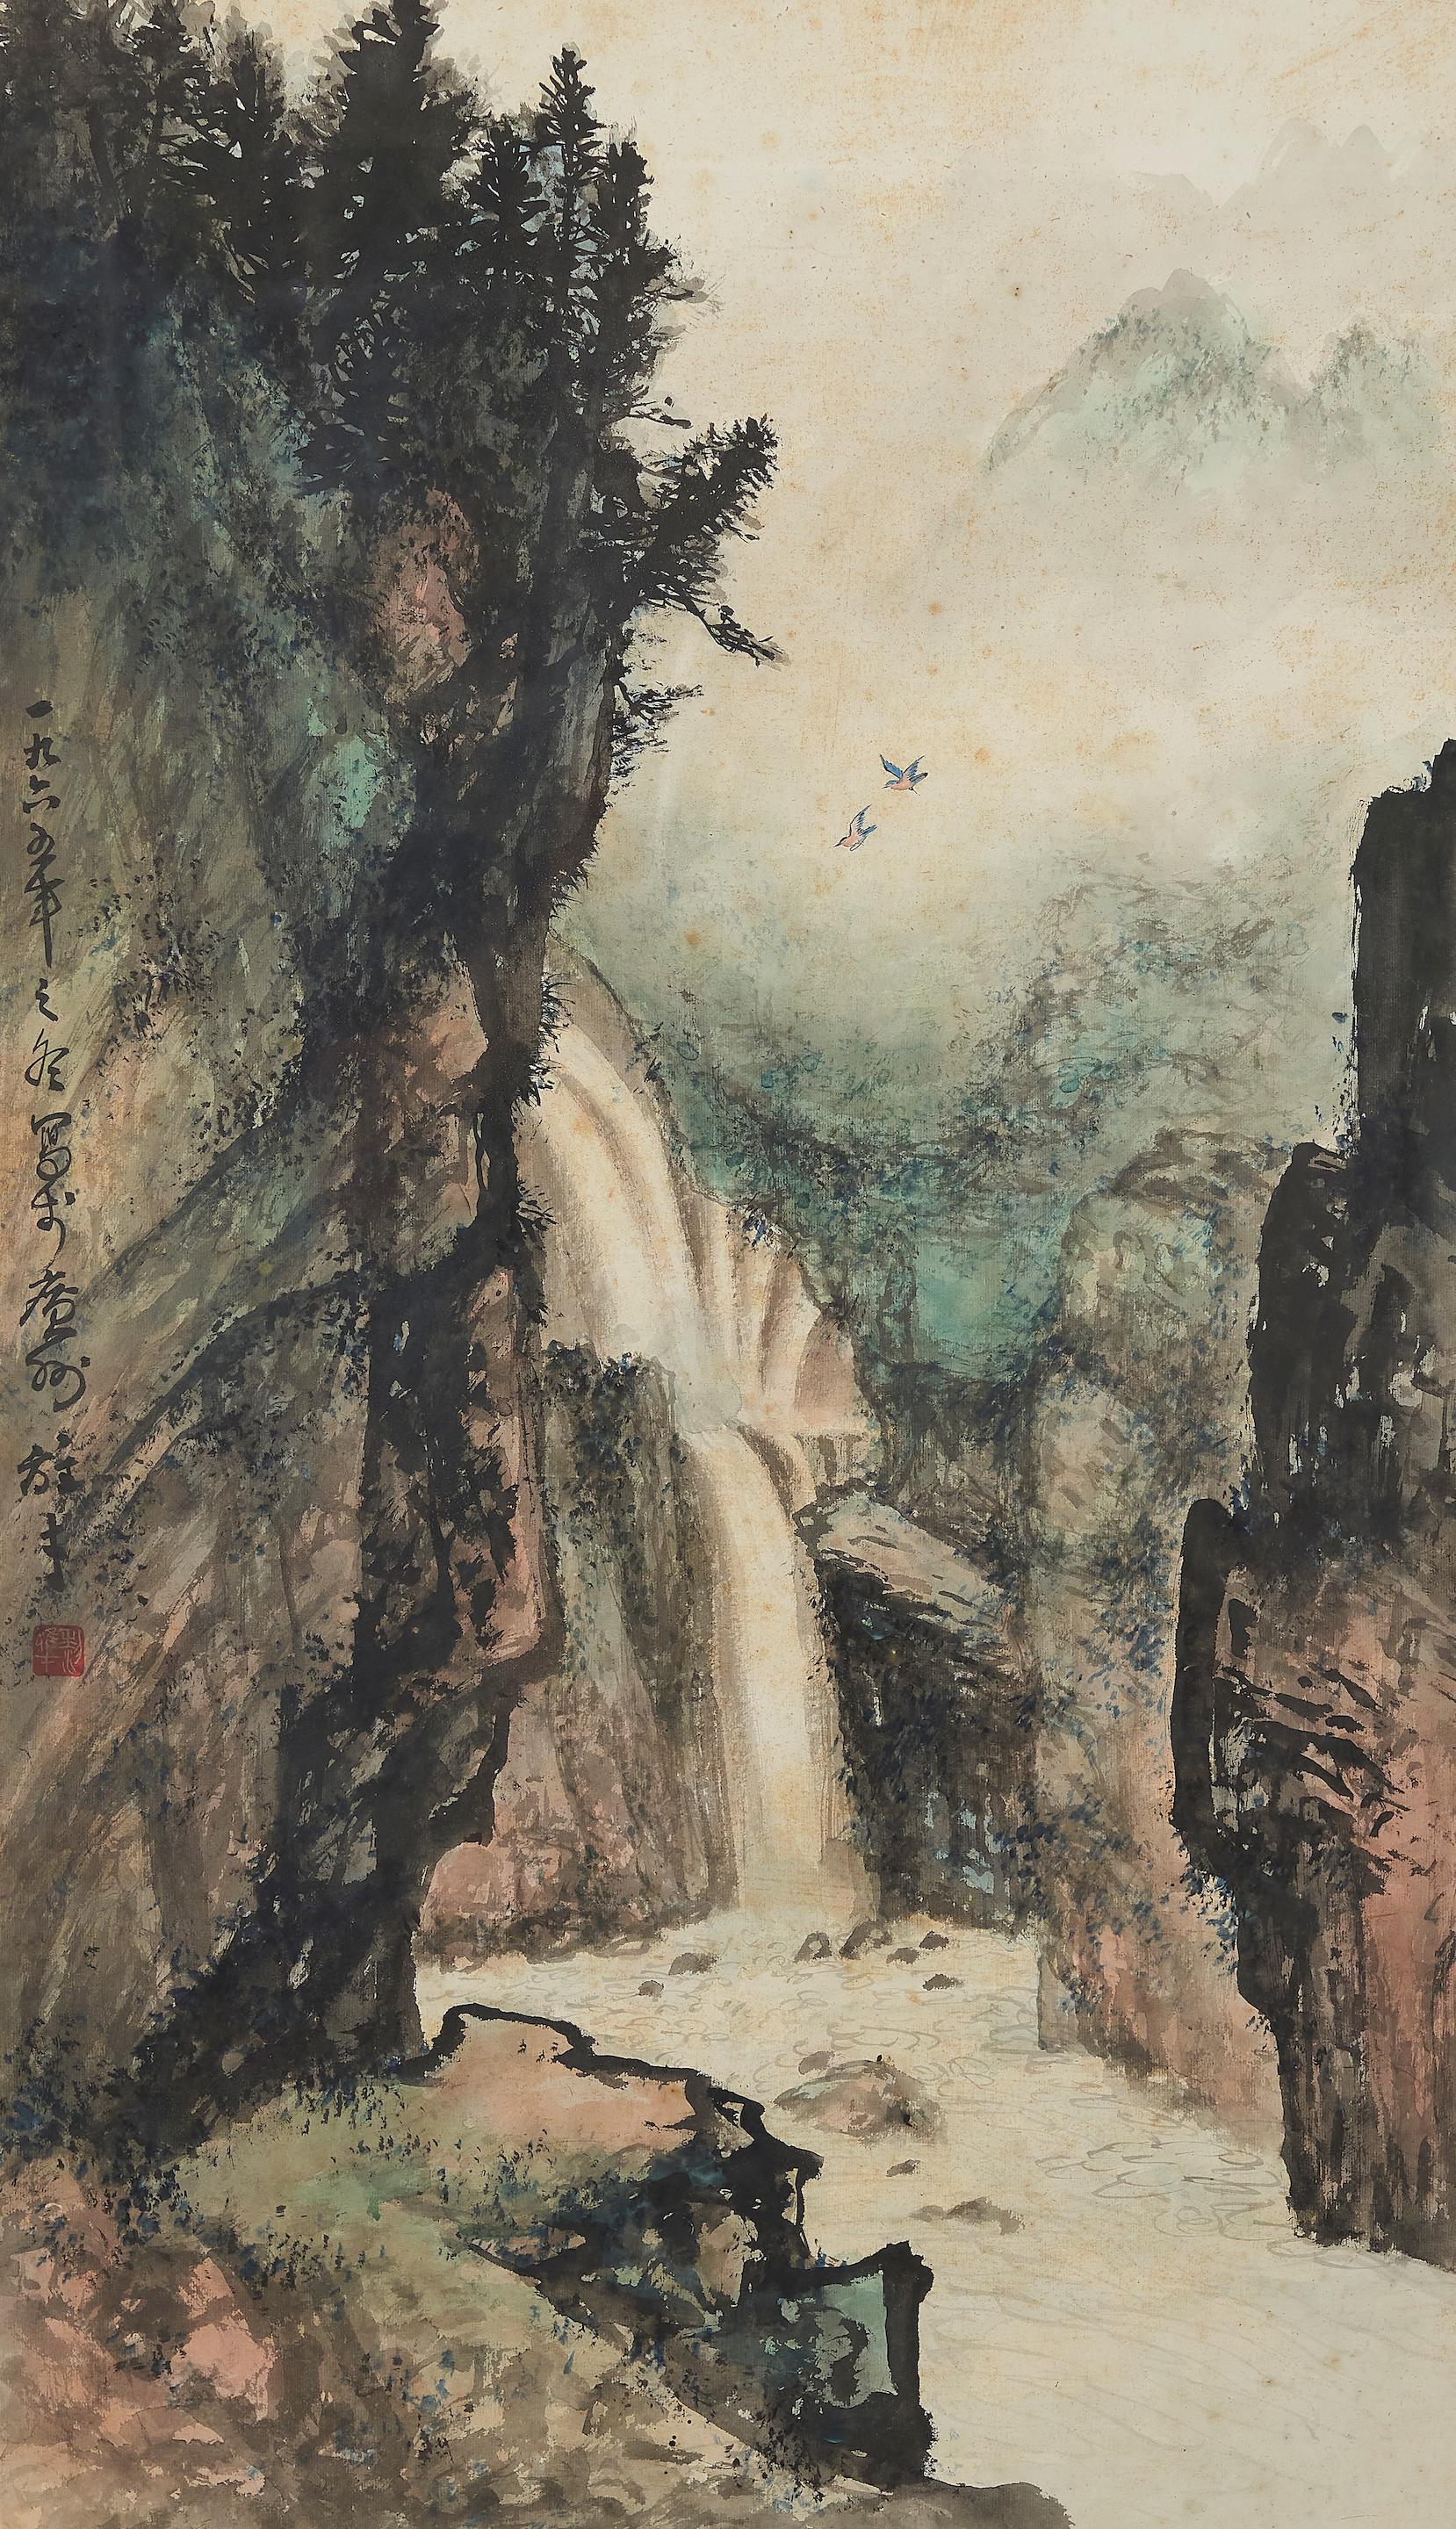 Li Xiongcai (1910-2002) Landscape of Waterfall and Cliff